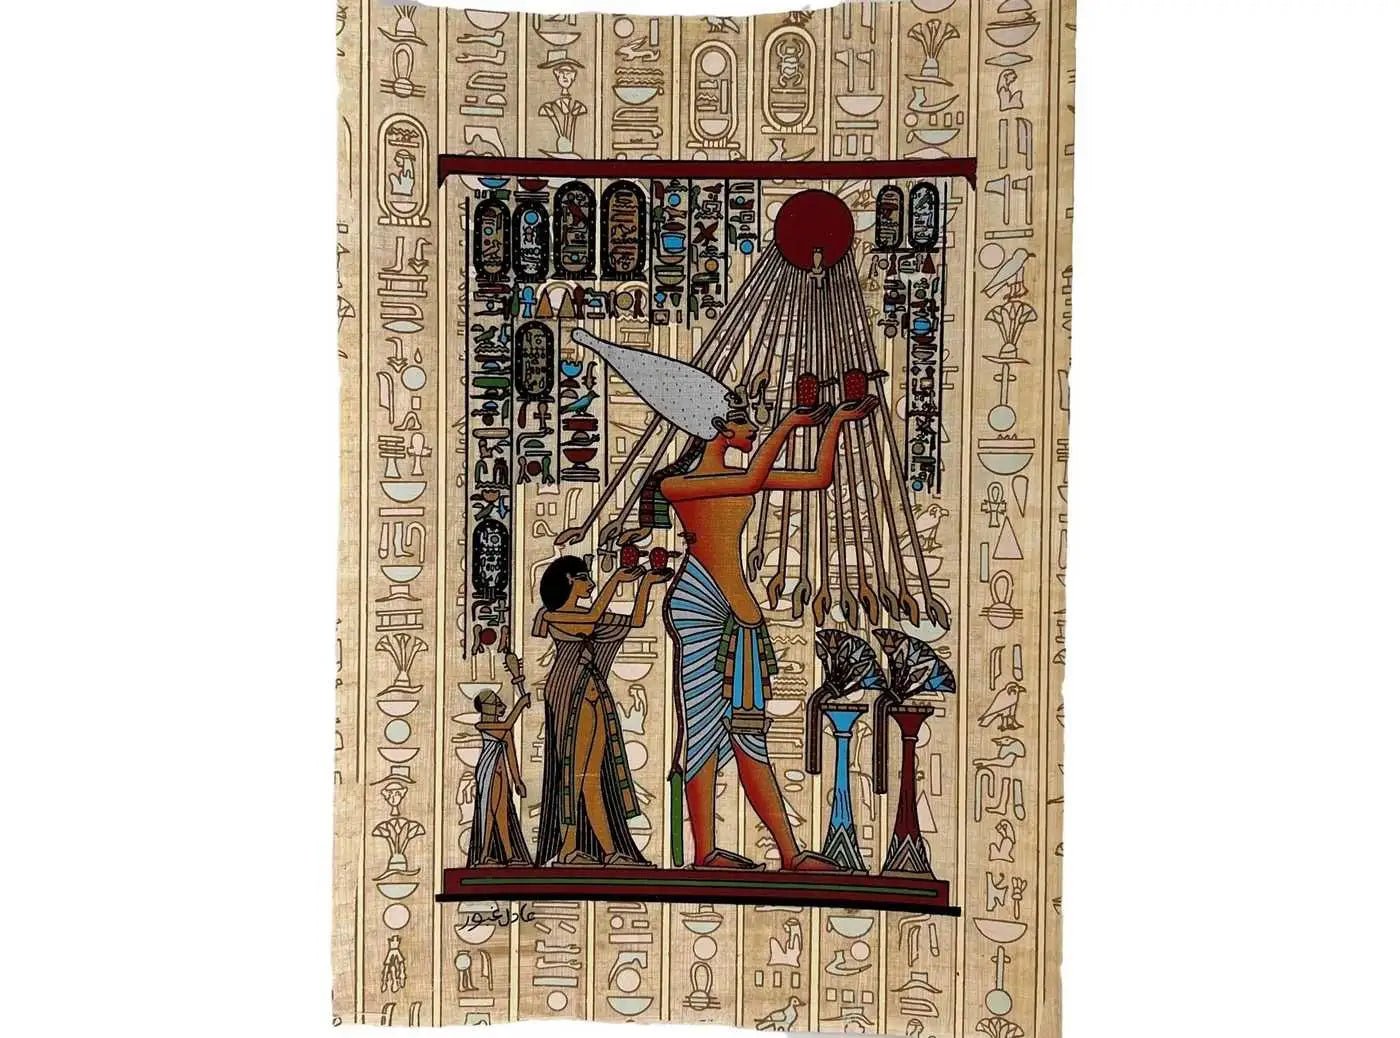 The Sacred Sun Ritual Of King Akhenaten Papyrus Painting - Akhenaton and Wife Nefertiti The Aten Ritual